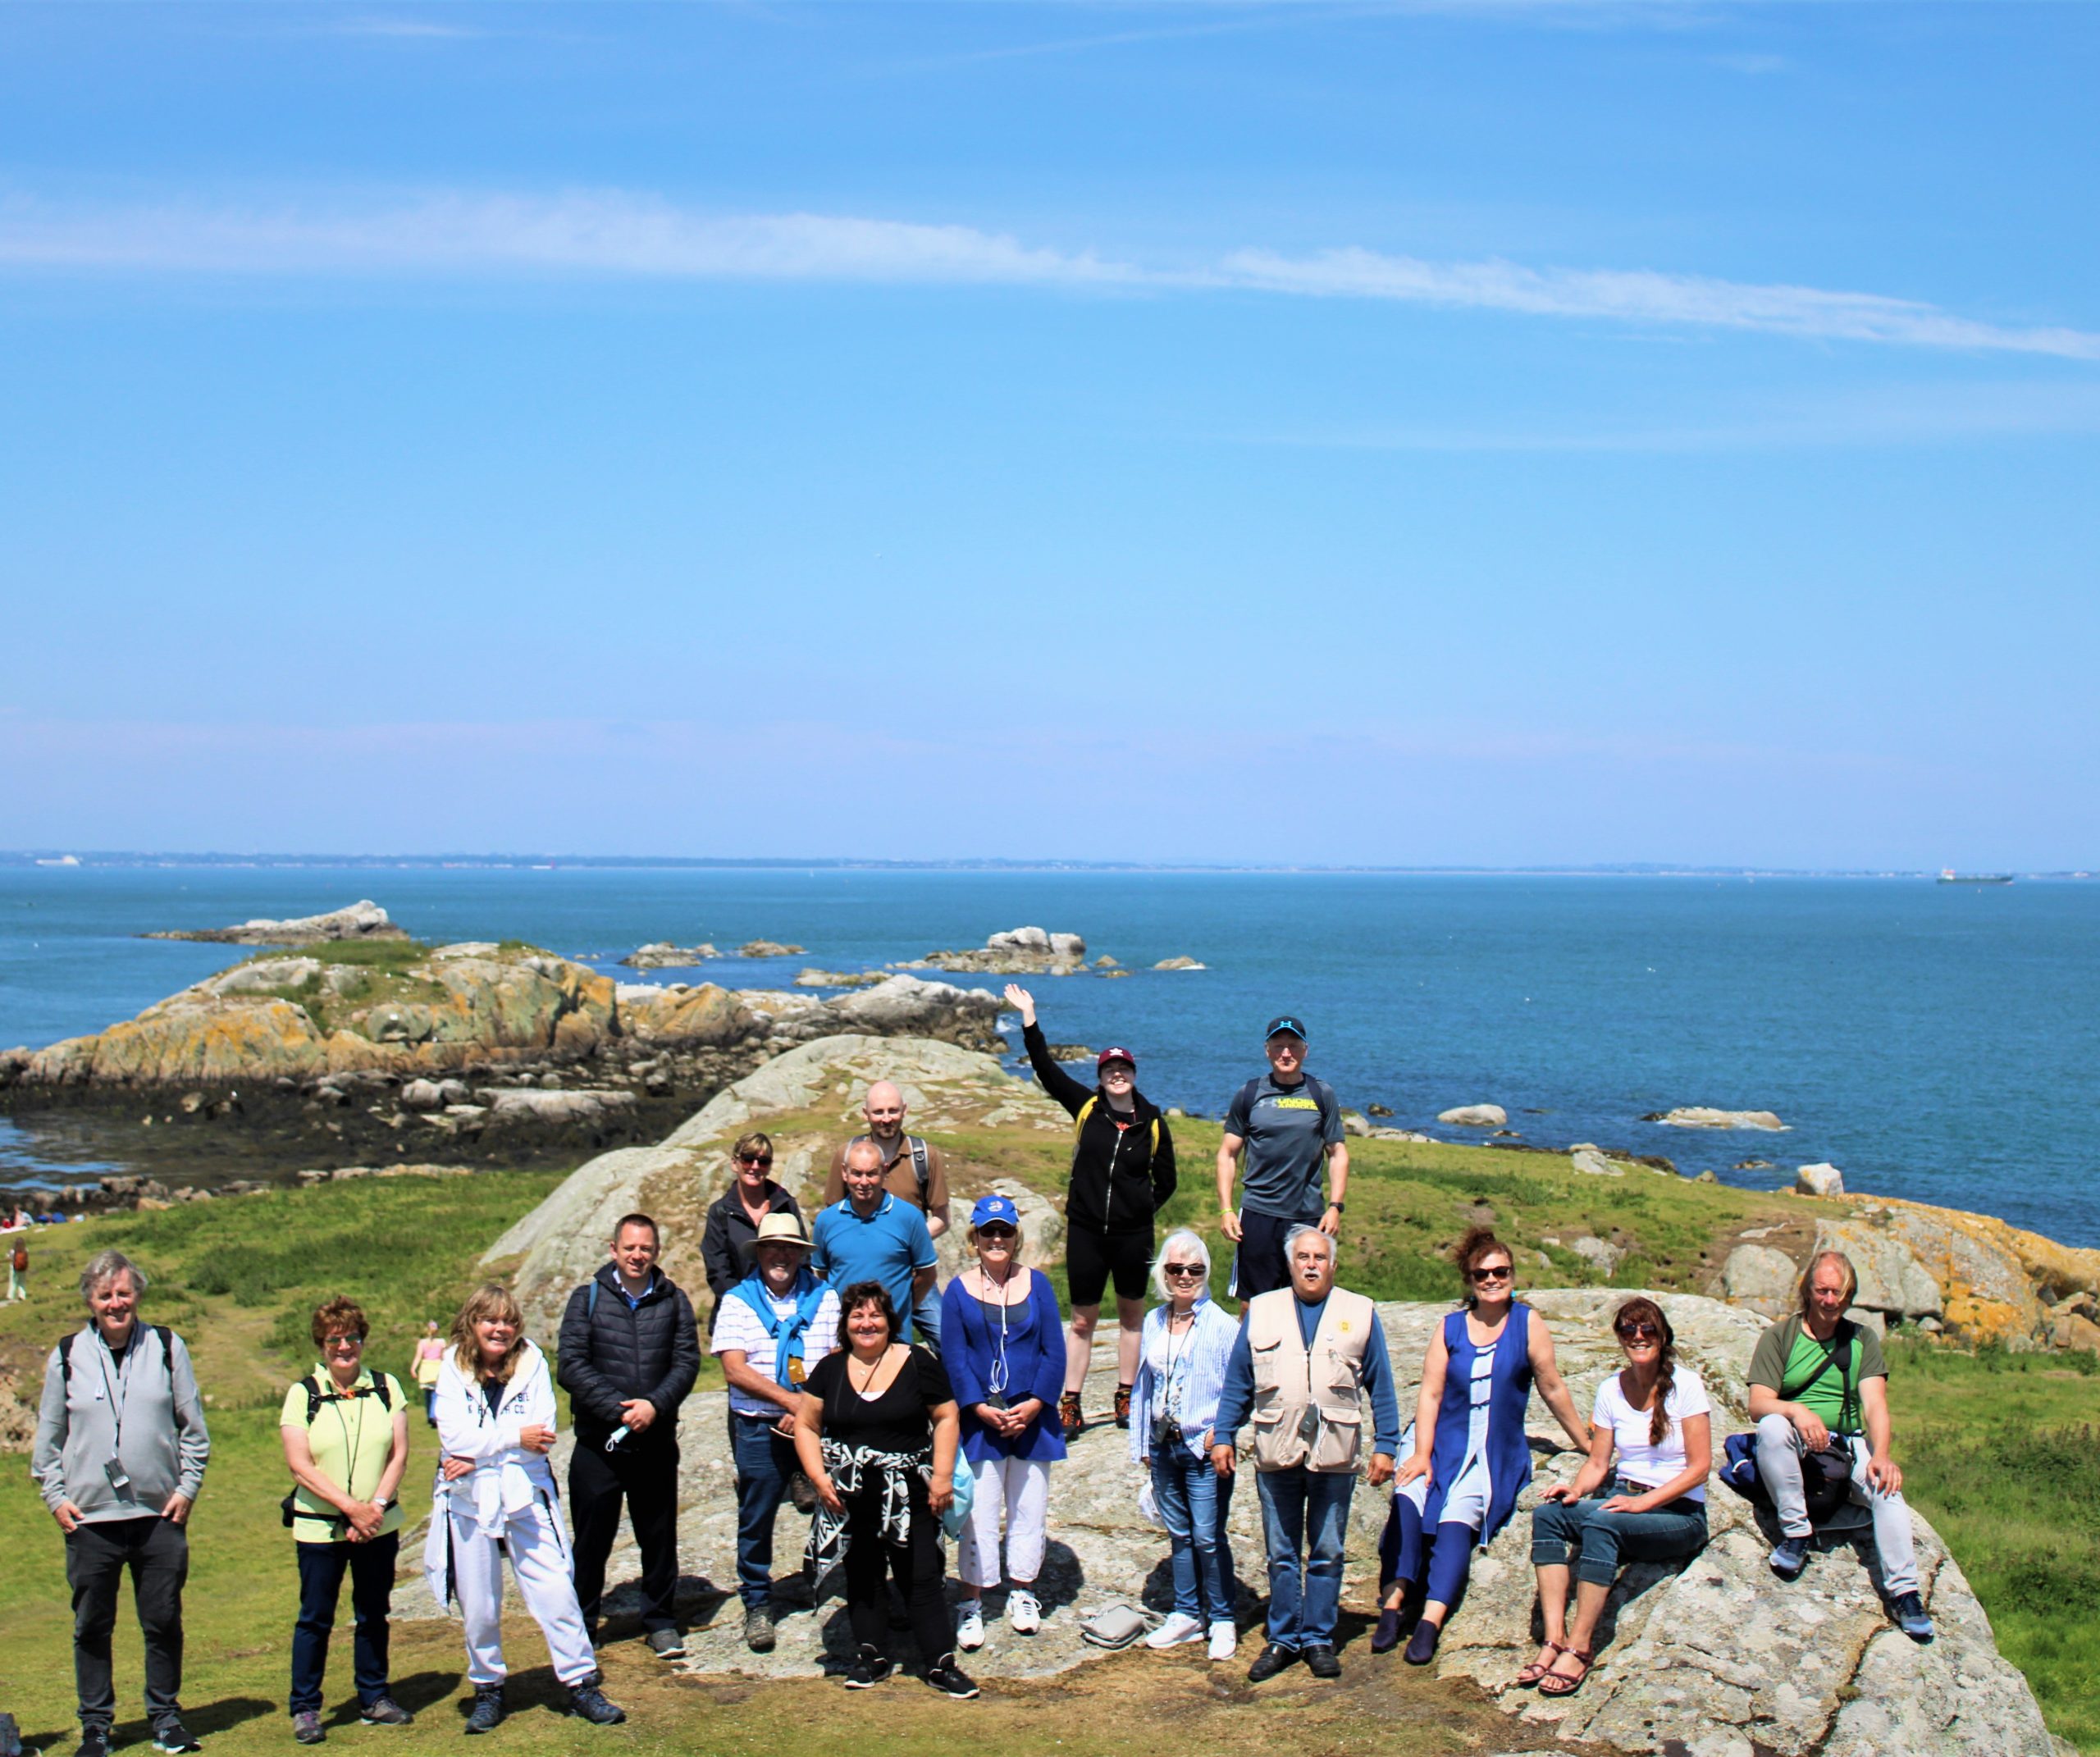 The Group on Dalkey Island